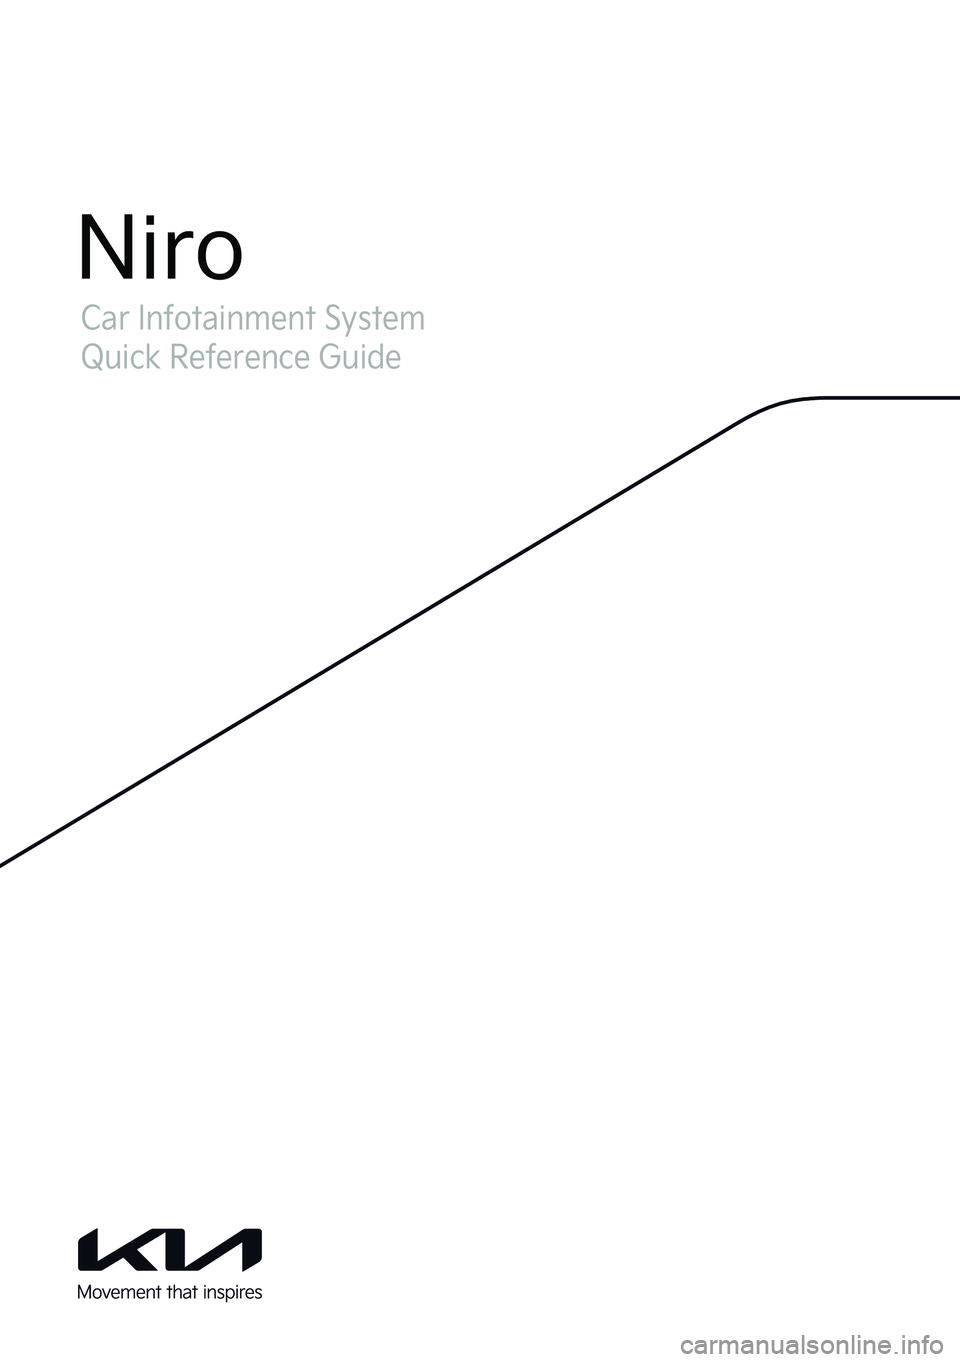 KIA NIRO 2022  Navigation System Quick Reference Guide Car Infotainment System
Quick Reference Guide
Niro  